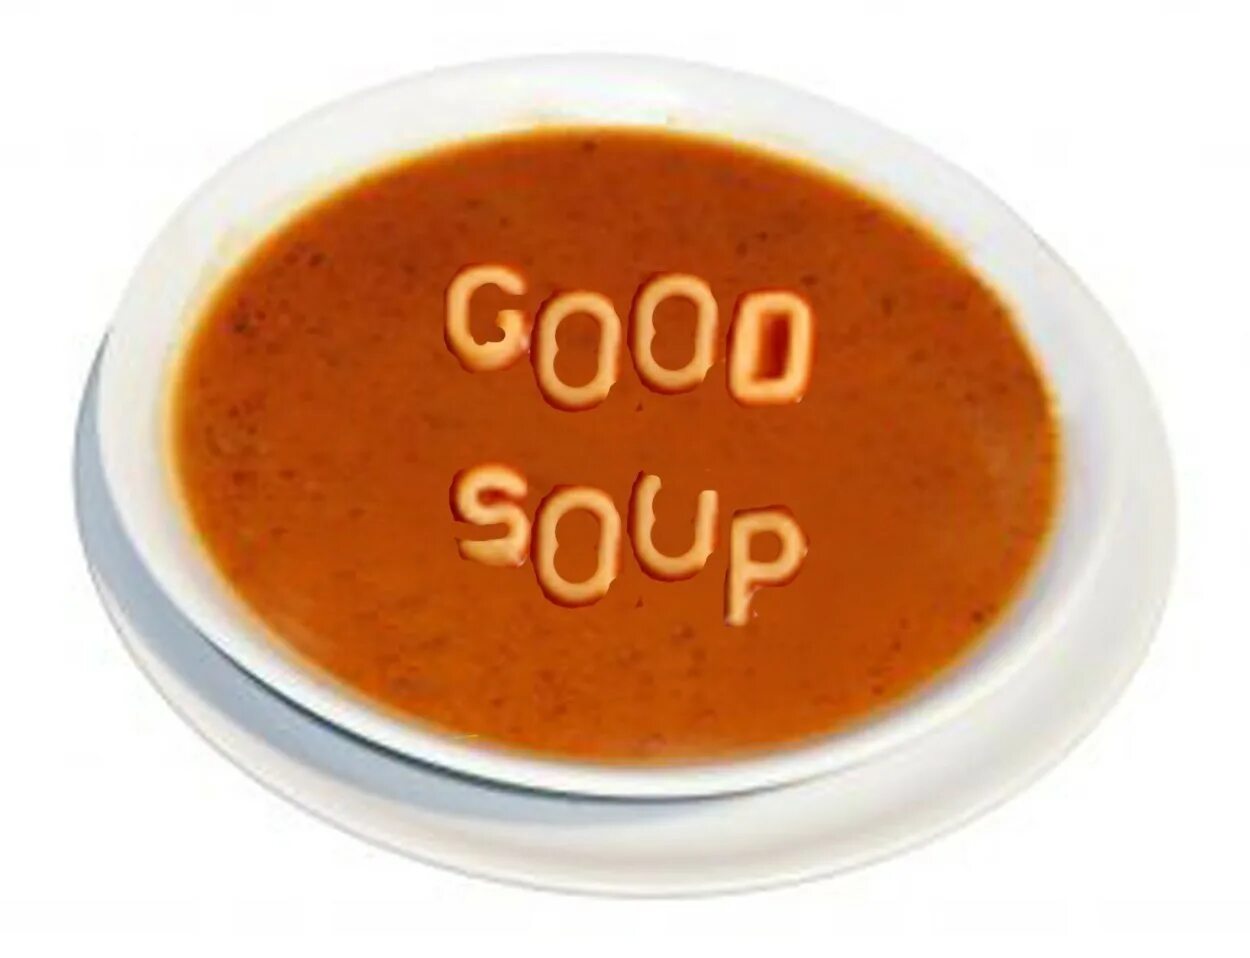 Good soup. Гуд суп. Гуд суп Мем. Soup 0.9. Мемы про суп.